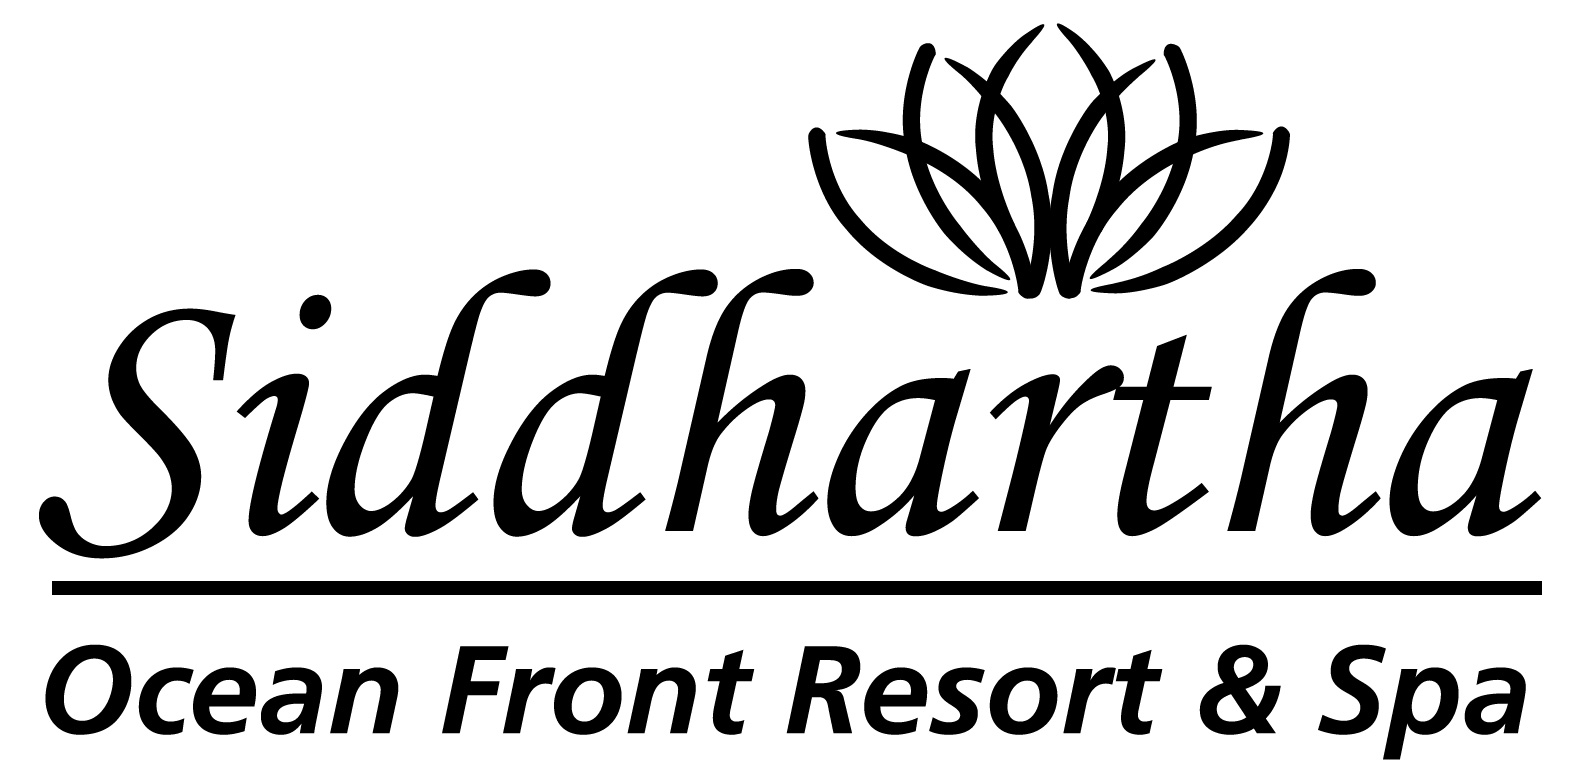 Siddhartha Ocean Front Resort & Spa